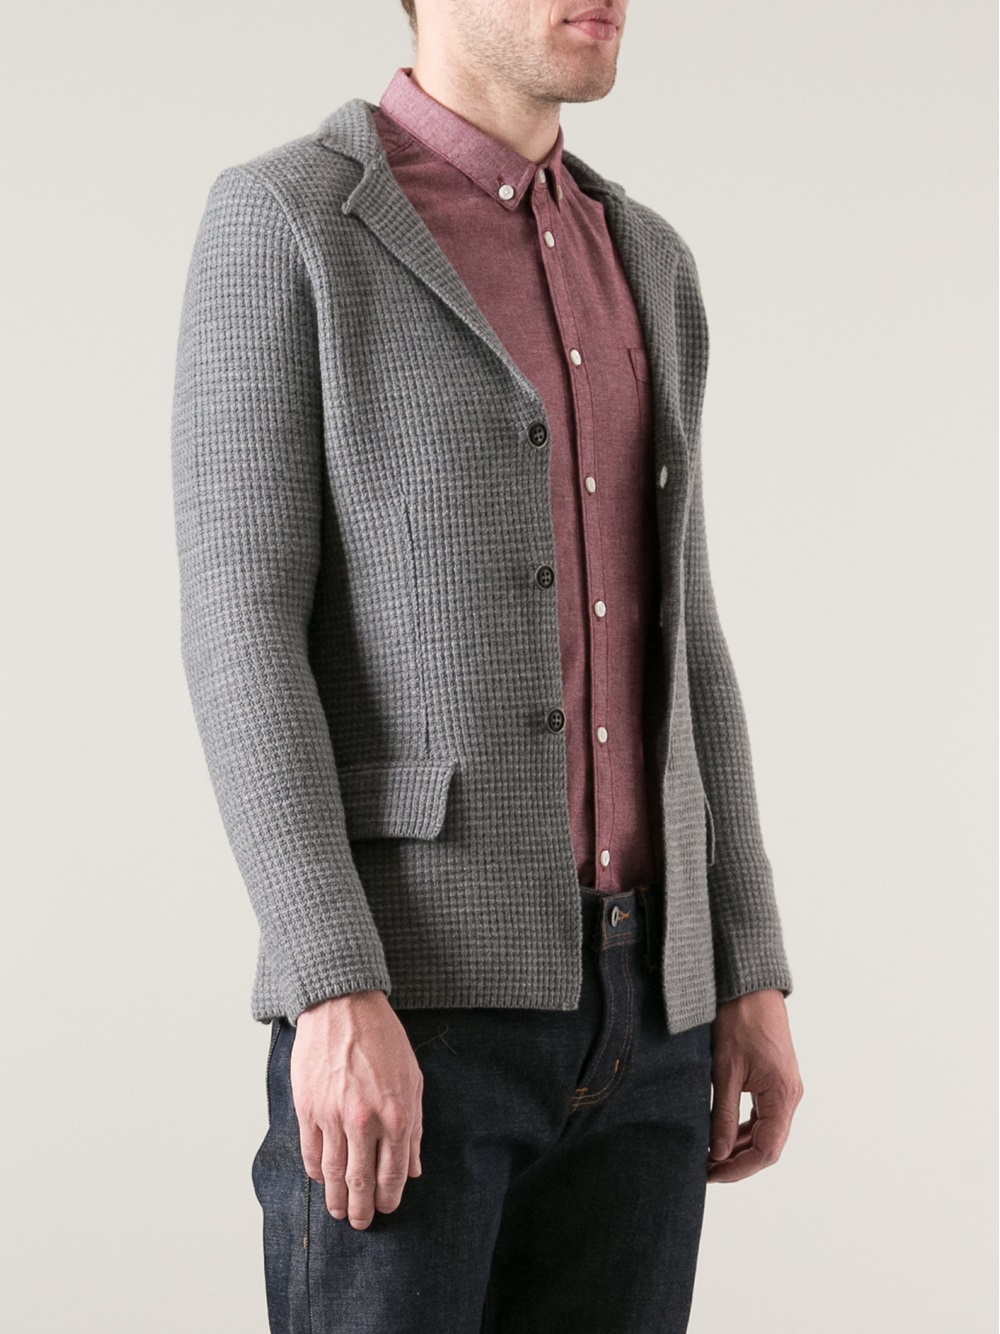 Lyst - Bark Knitted Blazer Style Cardigan in Gray for Men